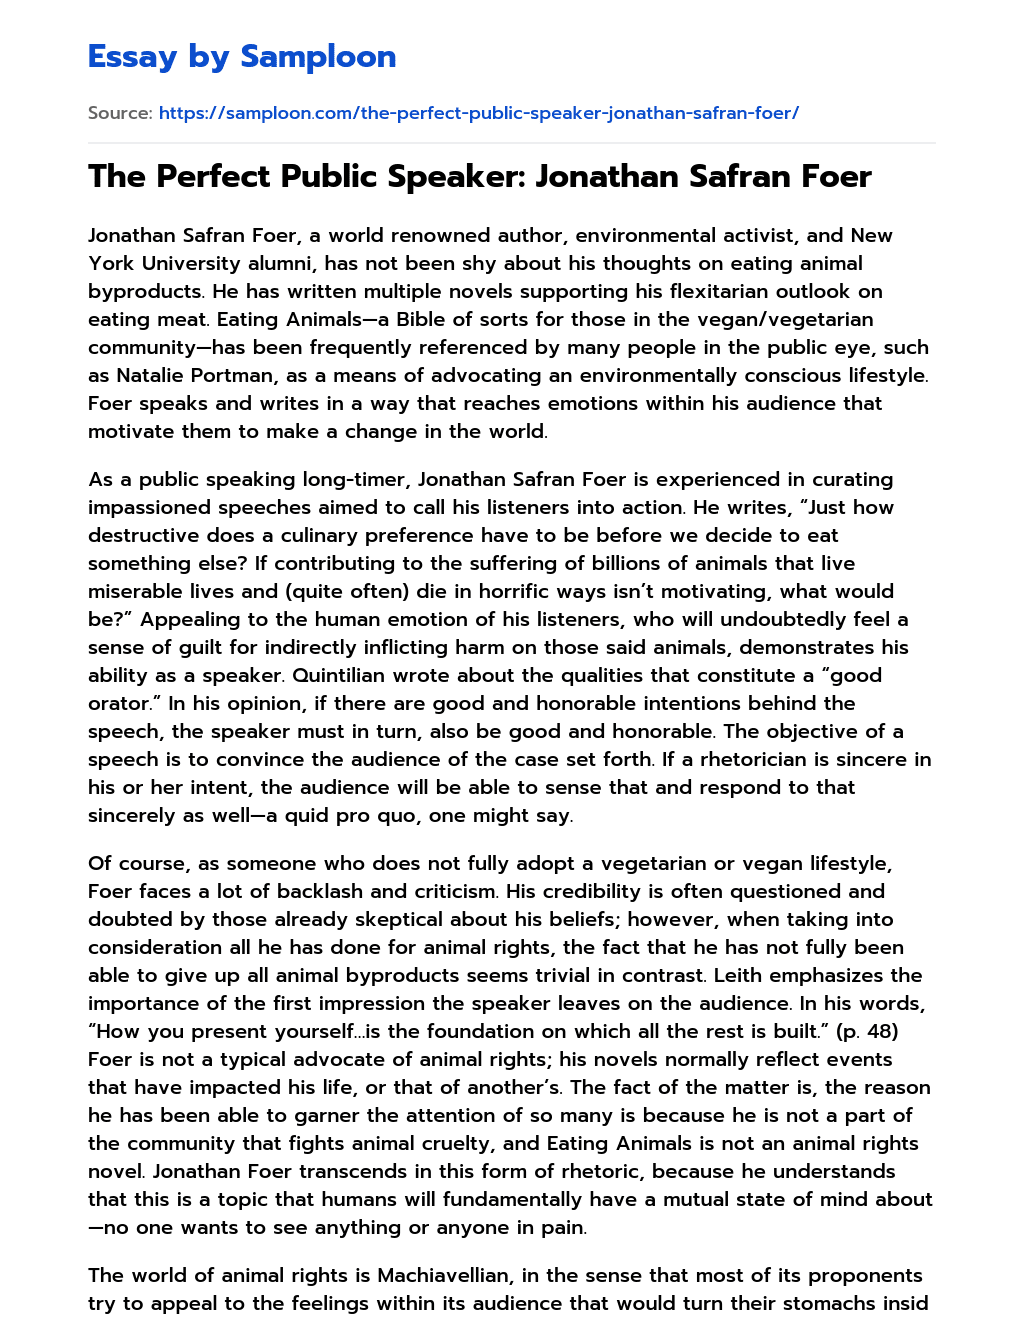 The Perfect Public Speaker: Jonathan Safran Foer essay